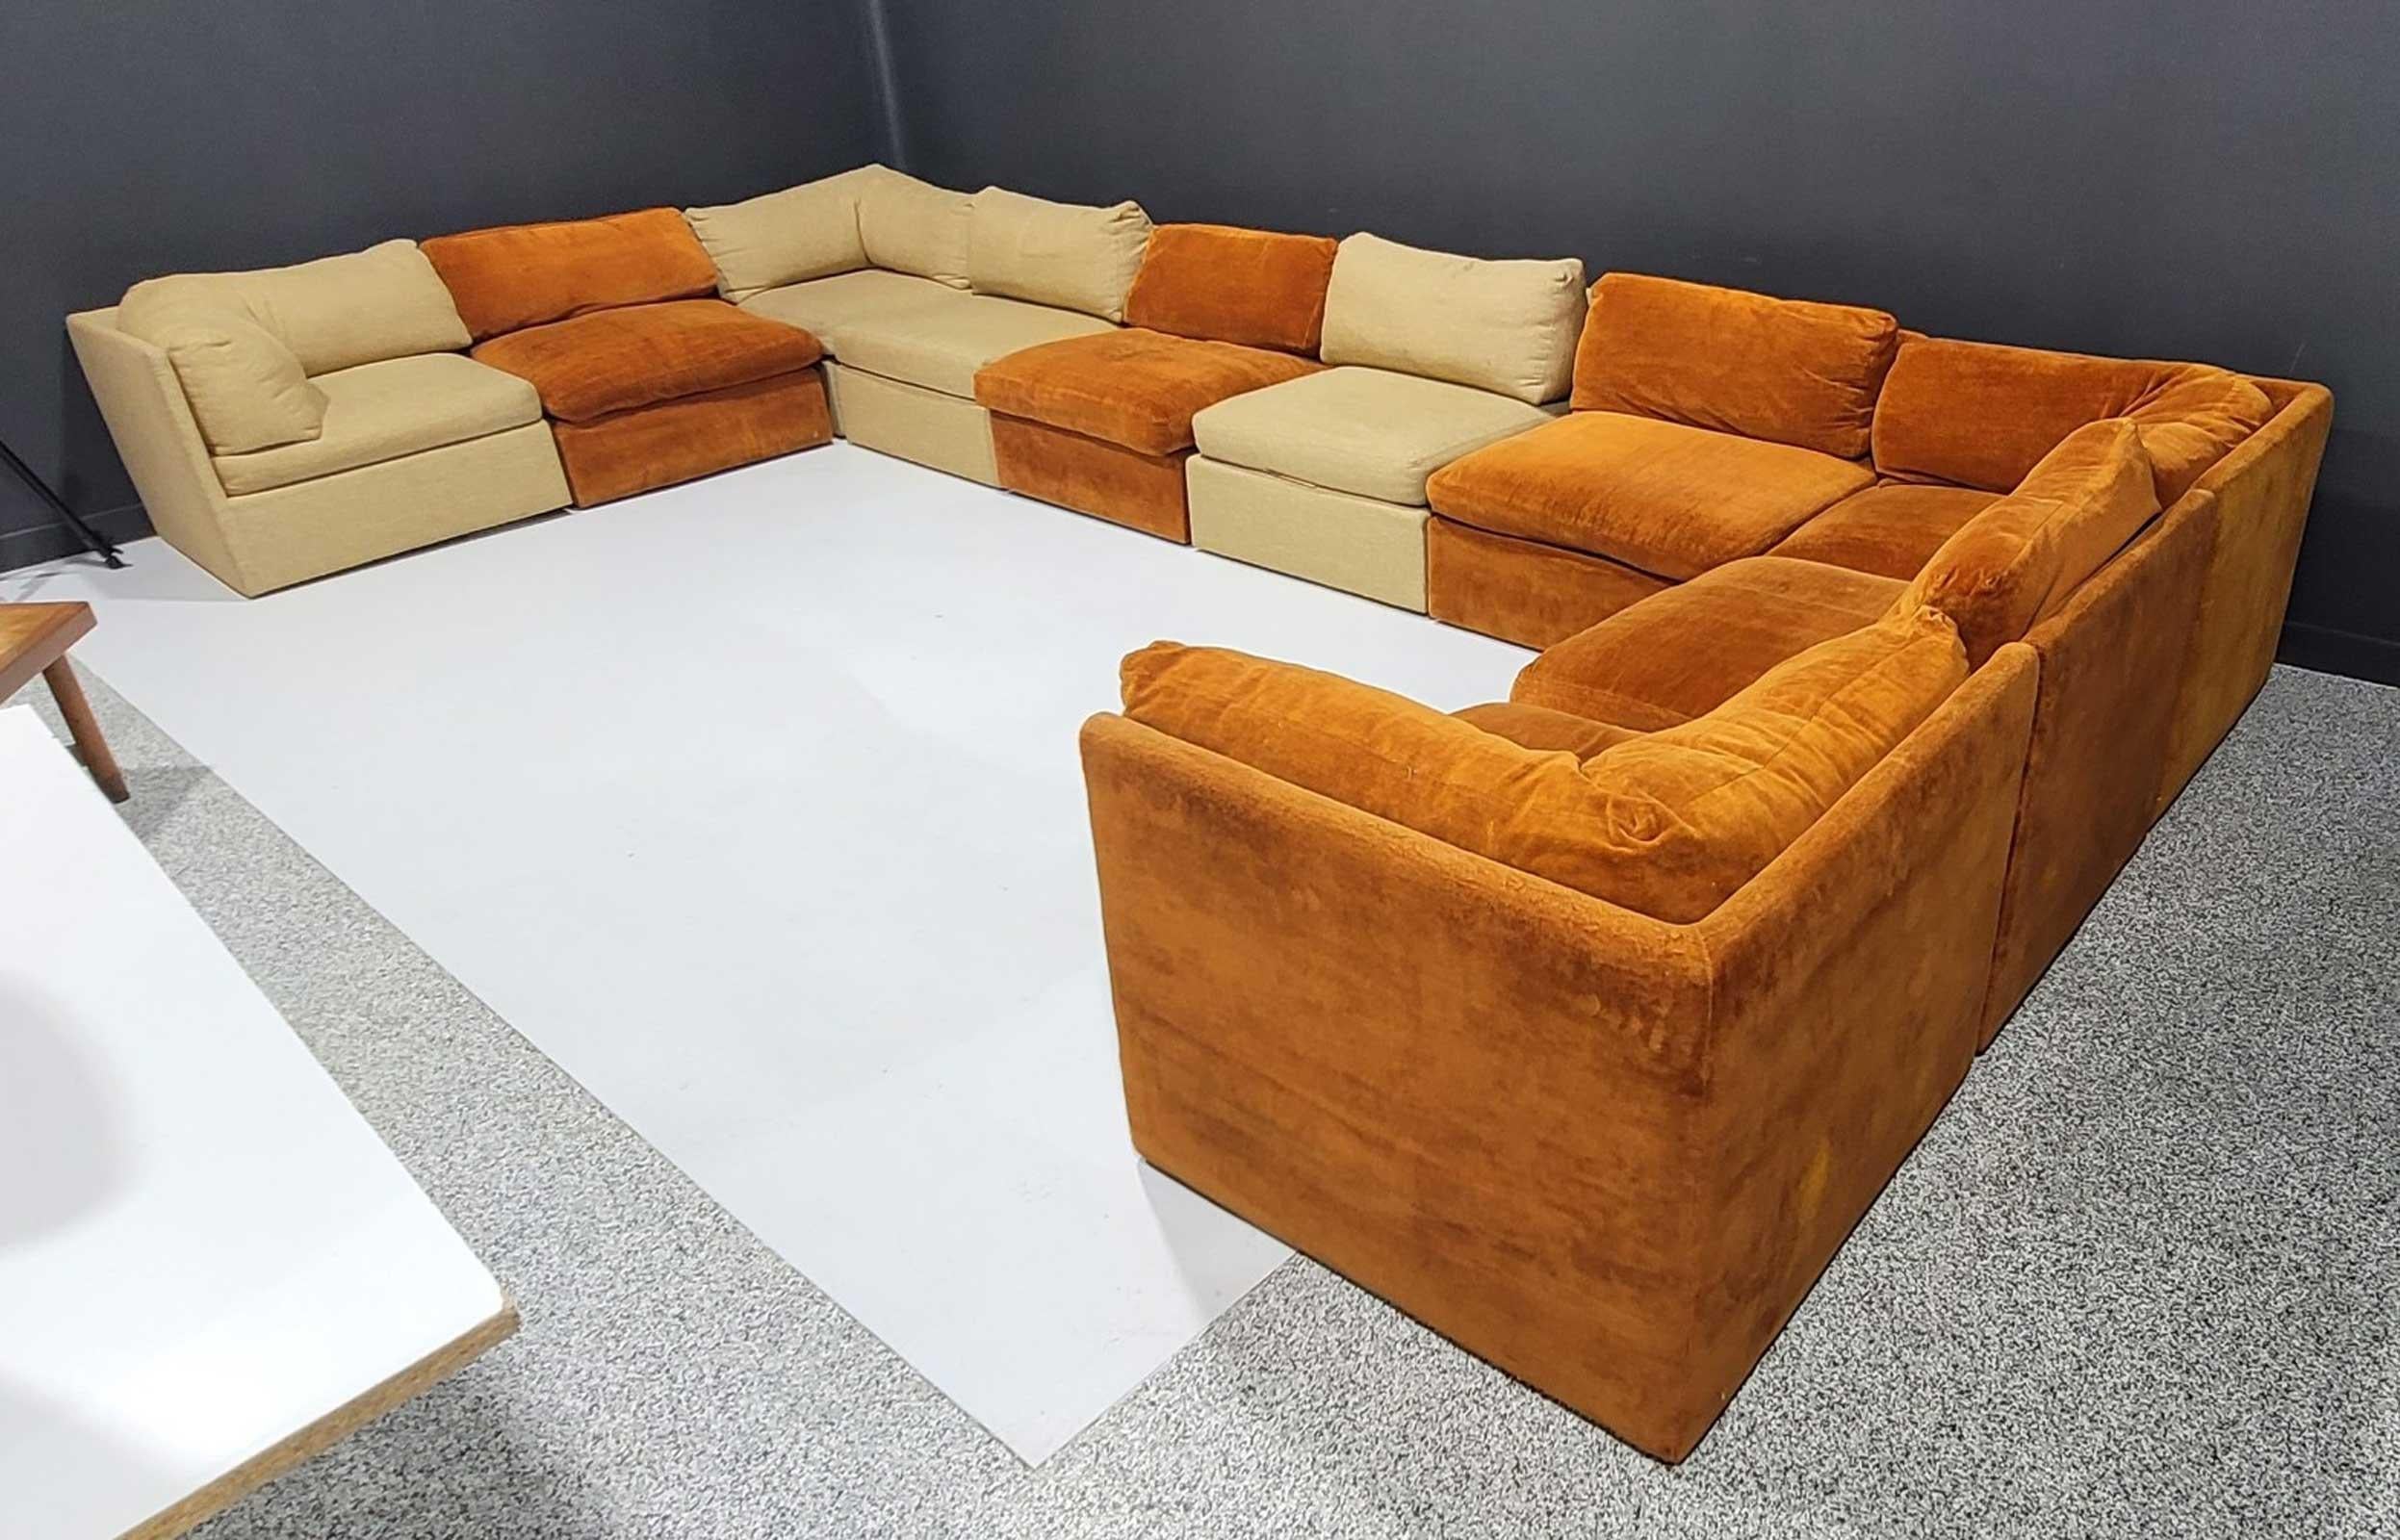 Upholstery Milo Baughman's Iconic 